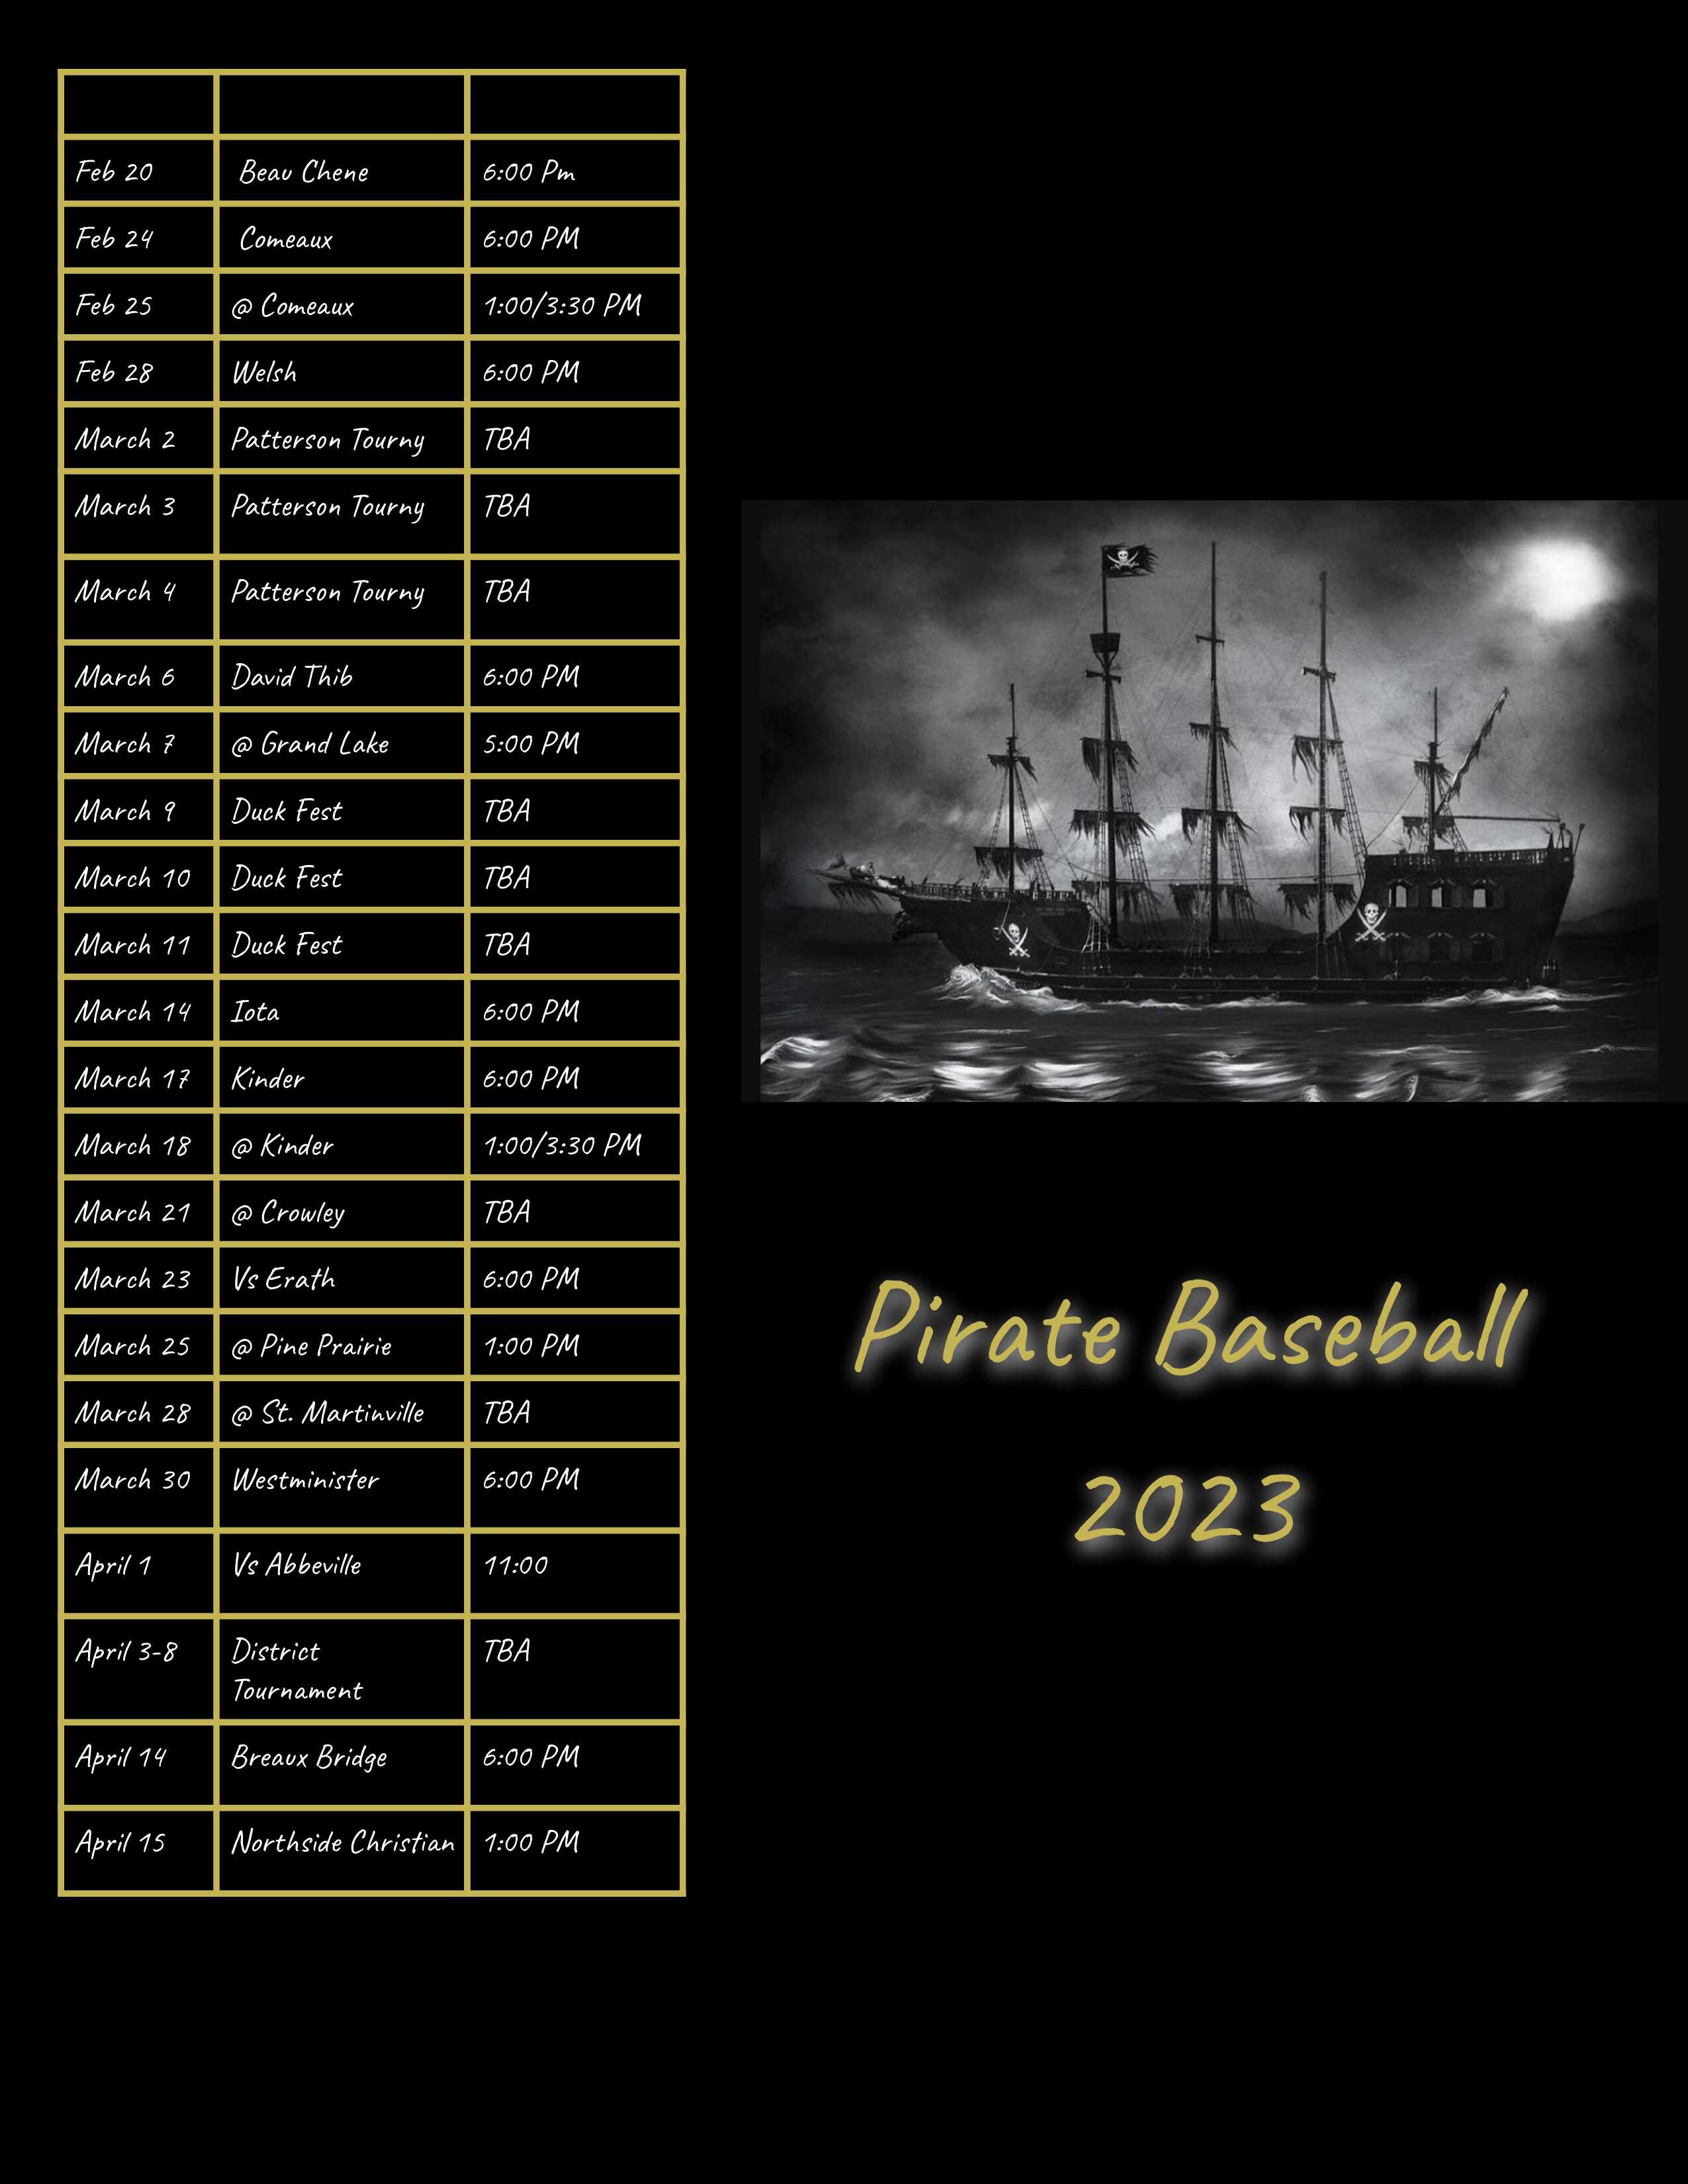 KHS Pirate Baseball schedule 